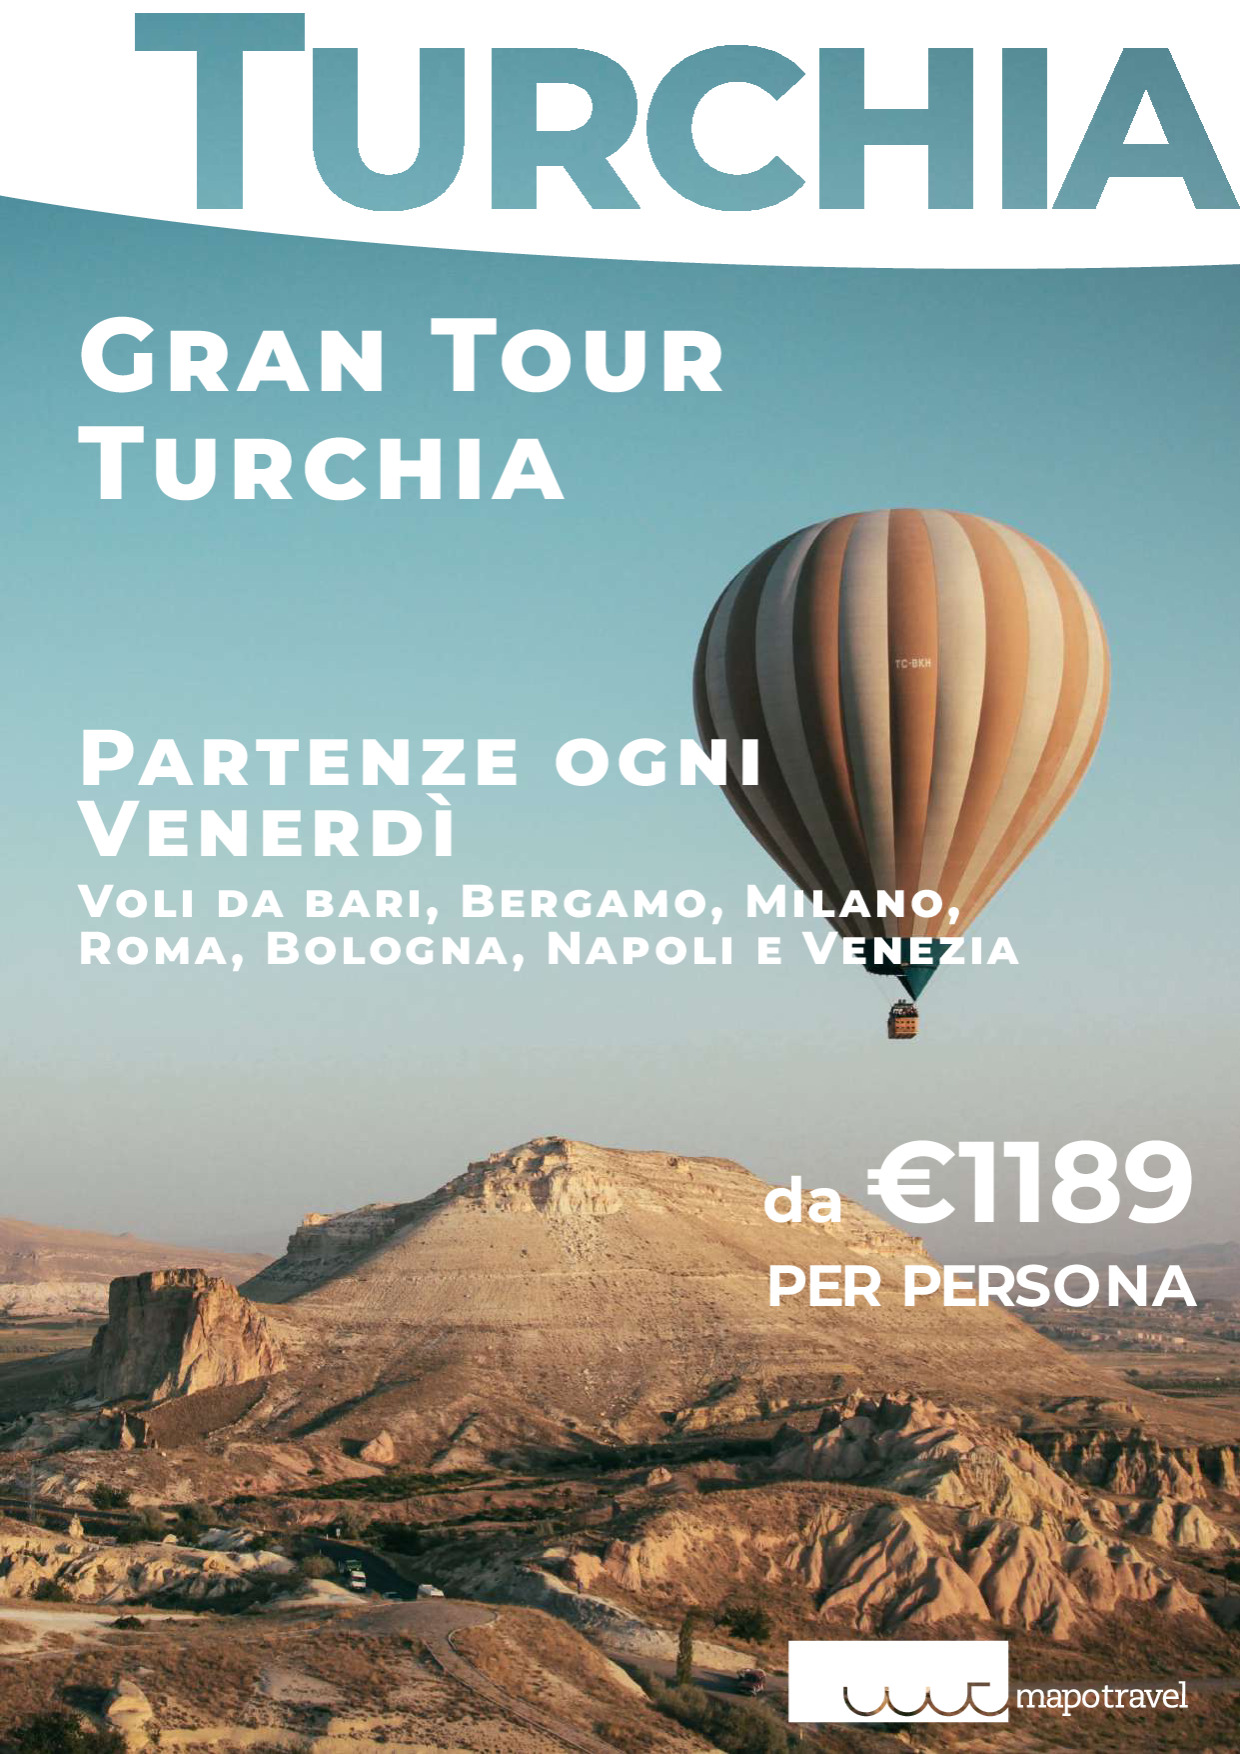 Grand Tour Turchia